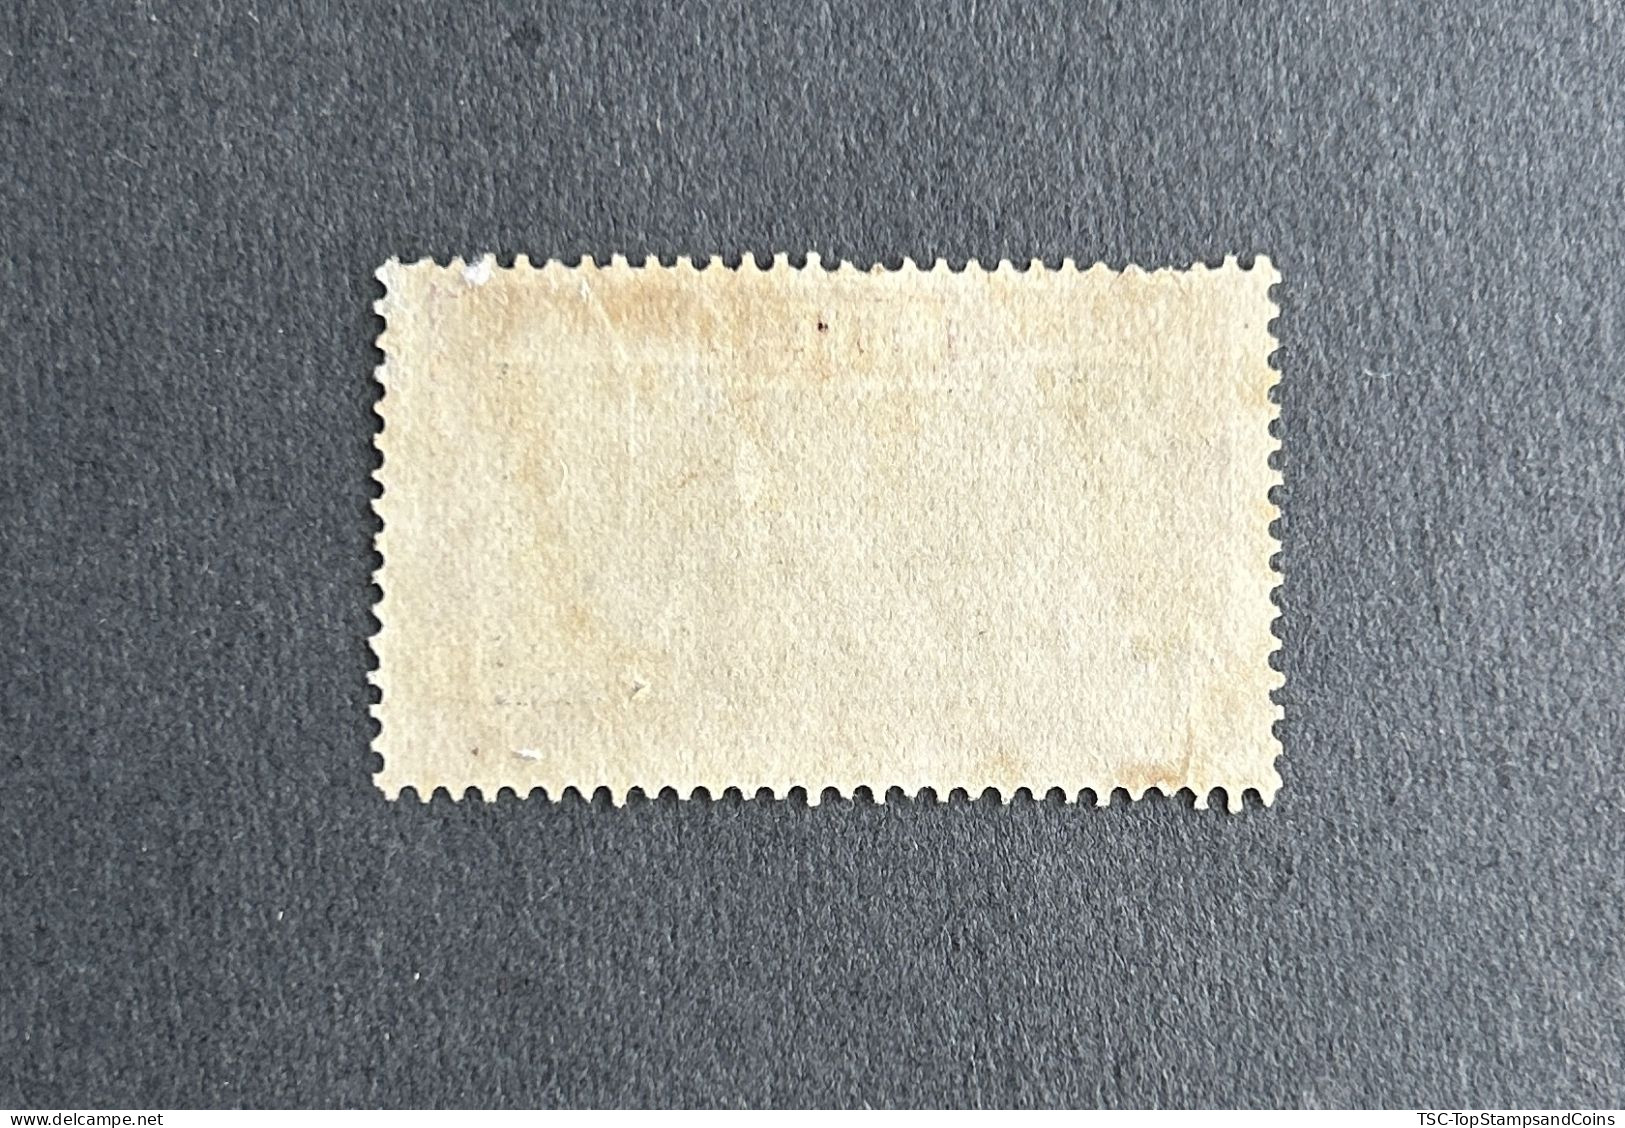 FRTG0141U2 - Agriculture - Oil Palm Plantation - 1 F Used Stamp - French Togo - 1924 - Used Stamps